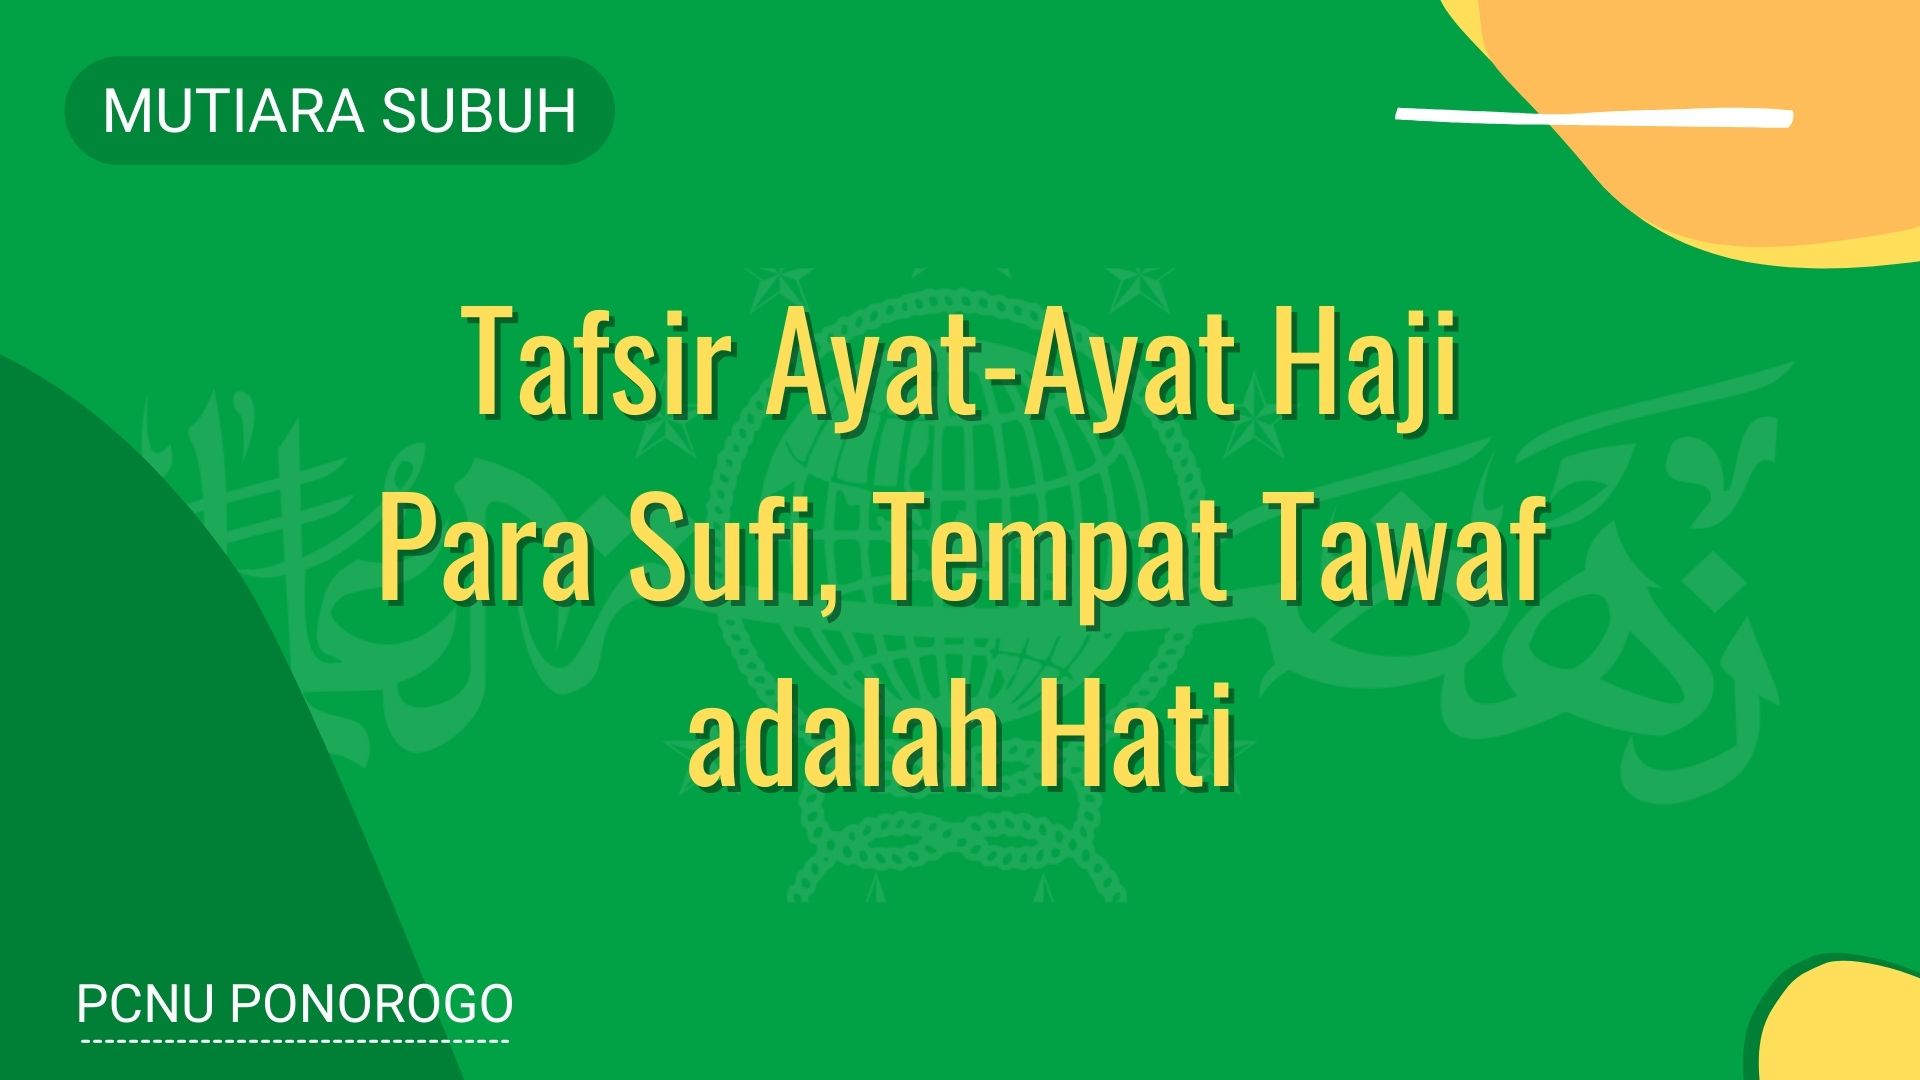 Tafsir Ayat-Ayat Haji Para Sufi, Tempat Tawaf adalah Hati